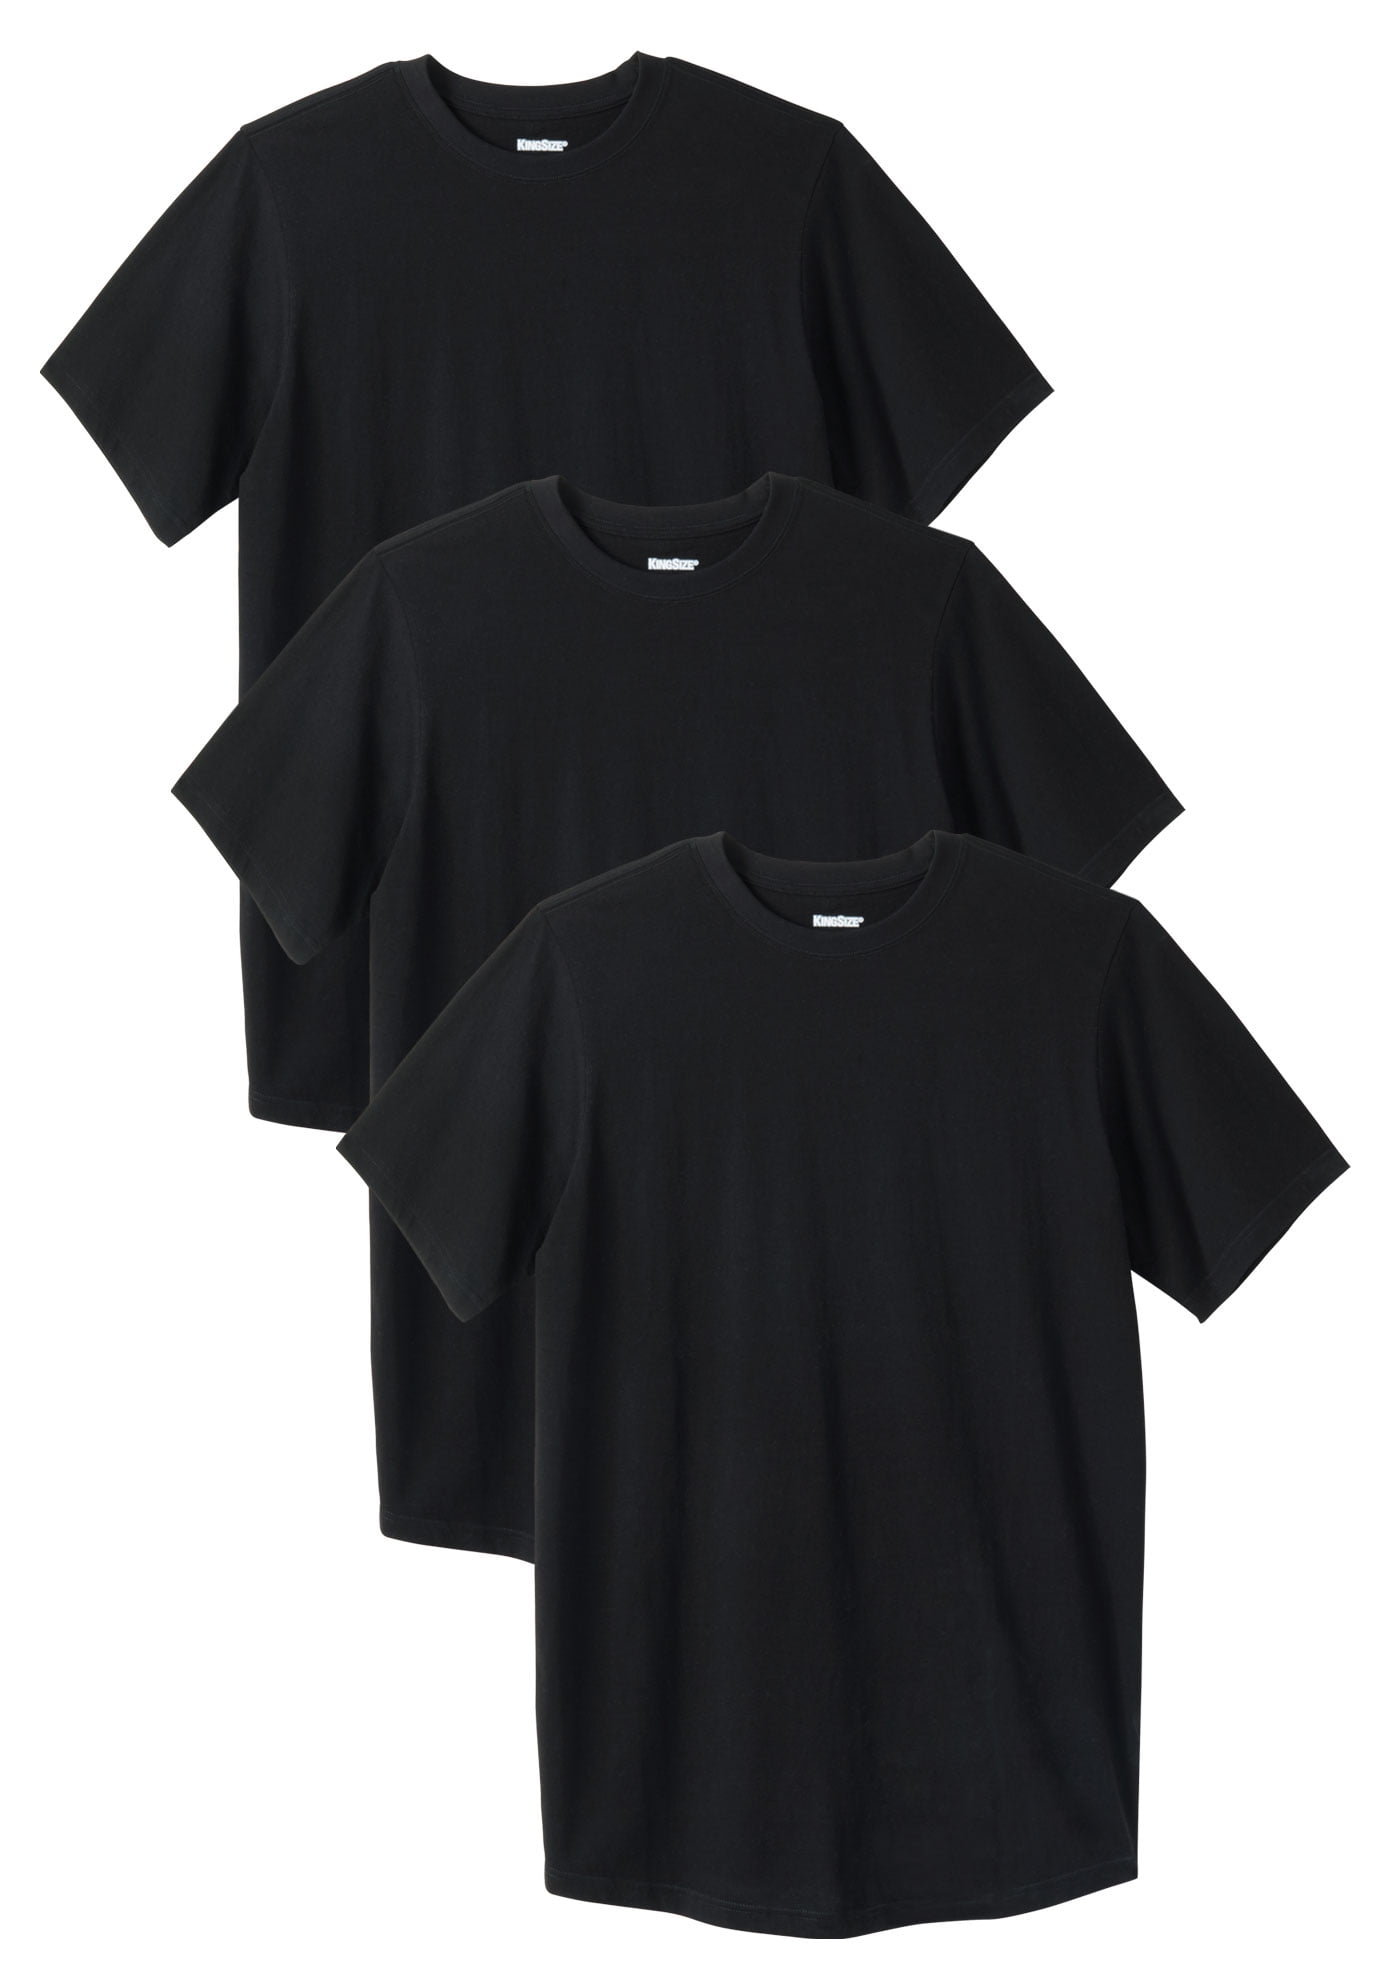 Kingsize Men's Big & Tall Cotton Crewneck Undershirt 3-Pack - Walmart.com